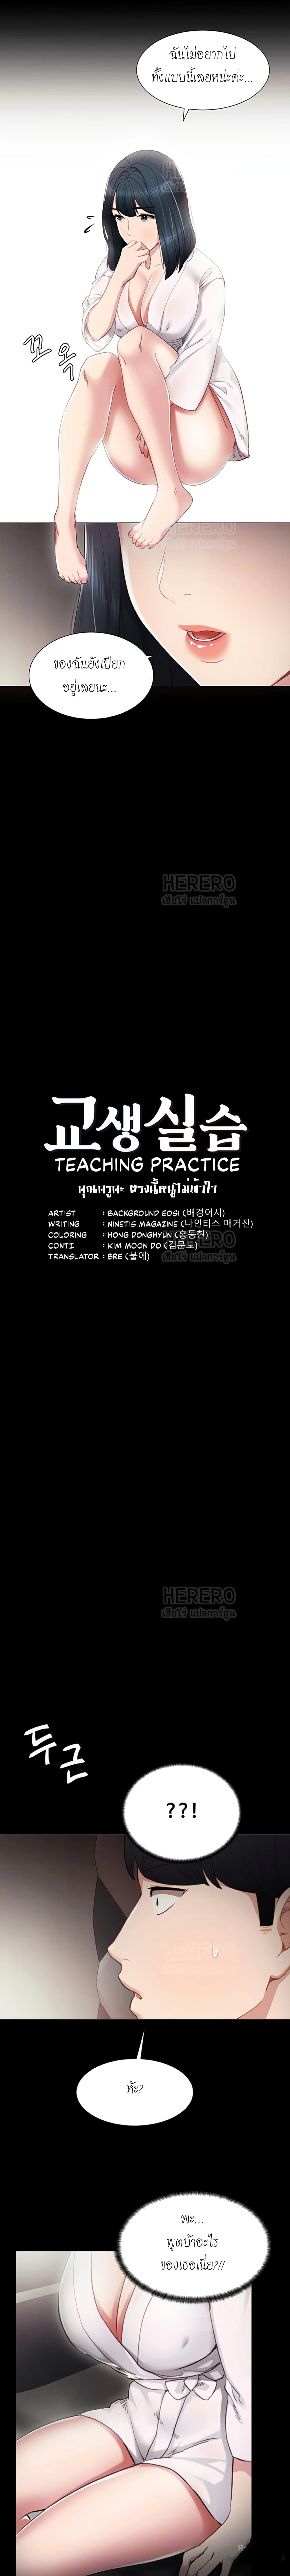 Teaching Practice 7 02